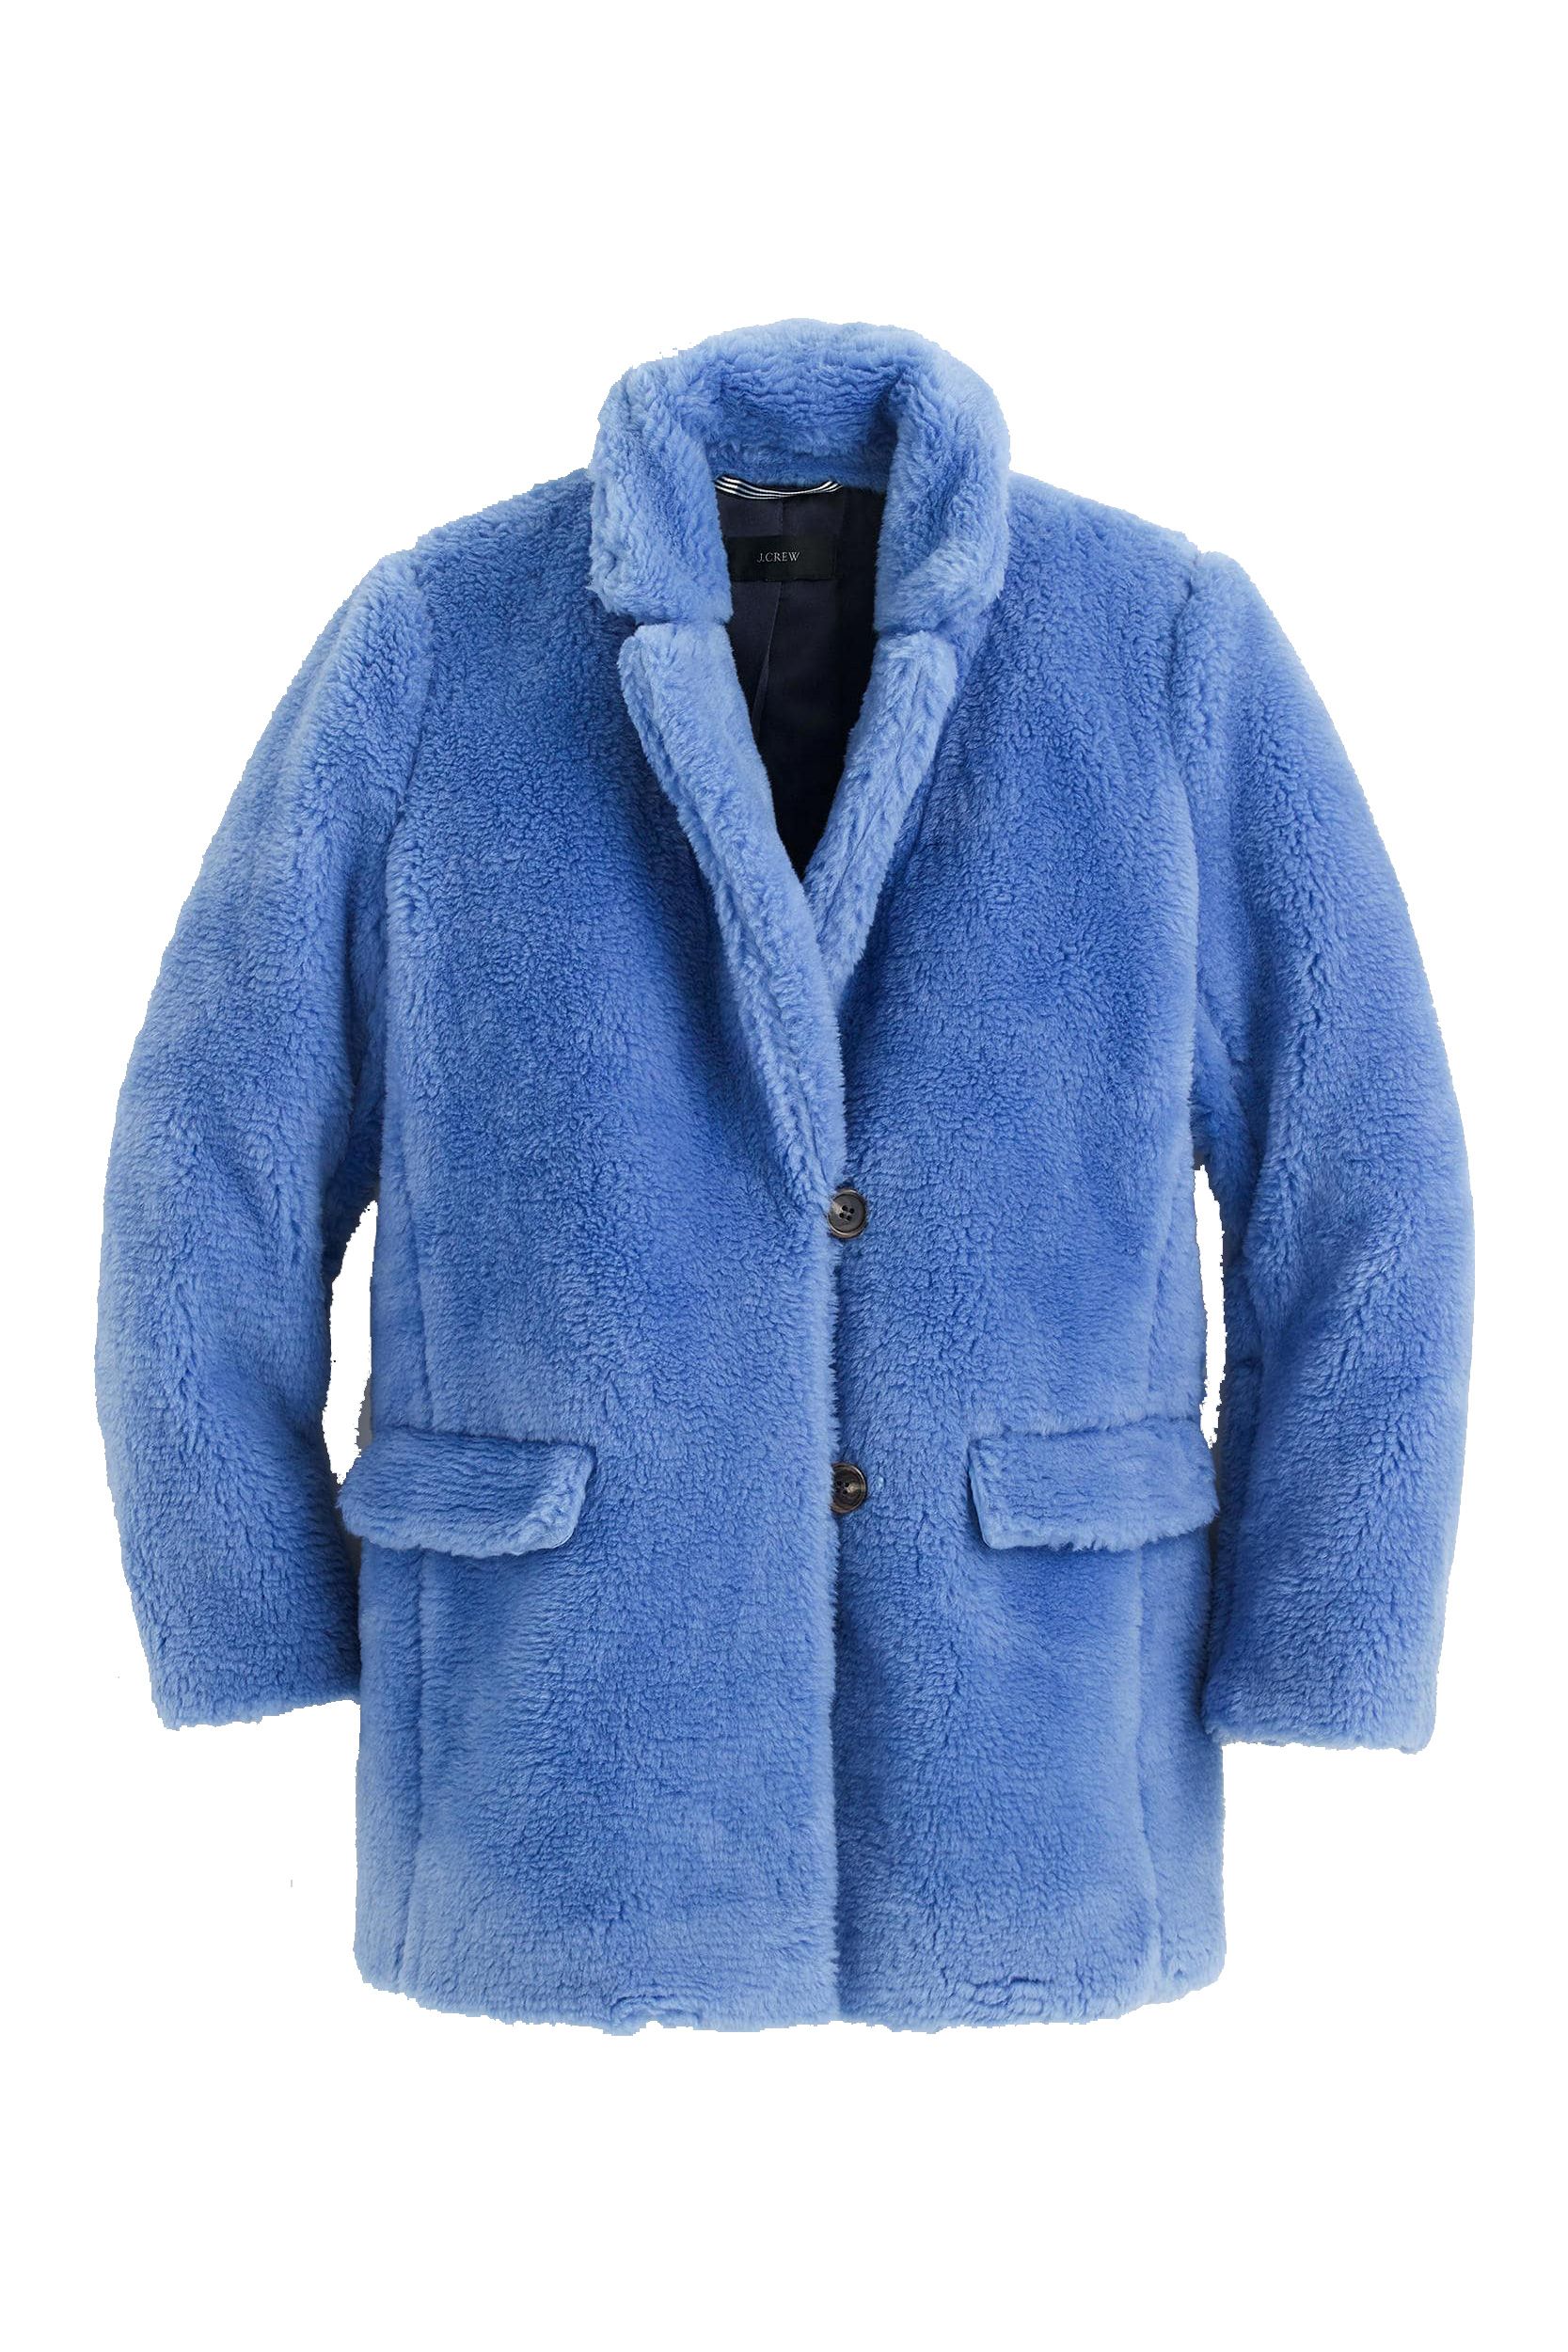 Girls' SHEIN Light Brown Cropped Teddy Bear Zip-Up Hooded Fuzzy Jacket  11-12 yrs | eBay